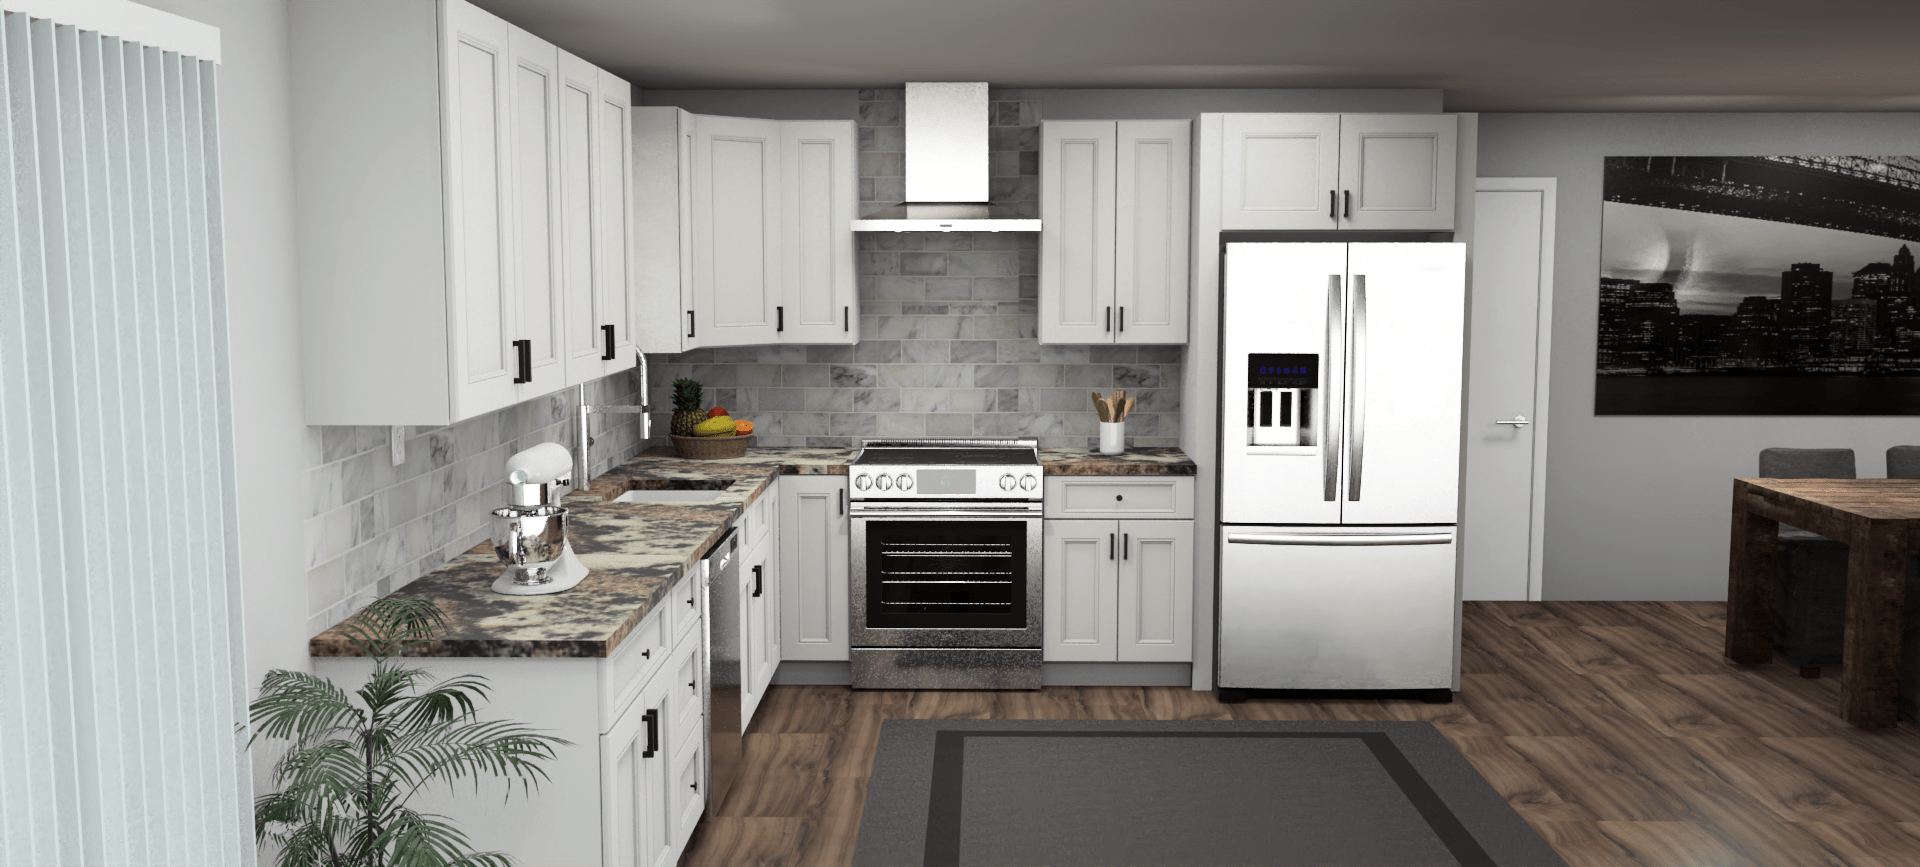 Fabuwood Allure Nexus Frost 12 x 11 L Shaped Kitchen Front Layout Photo